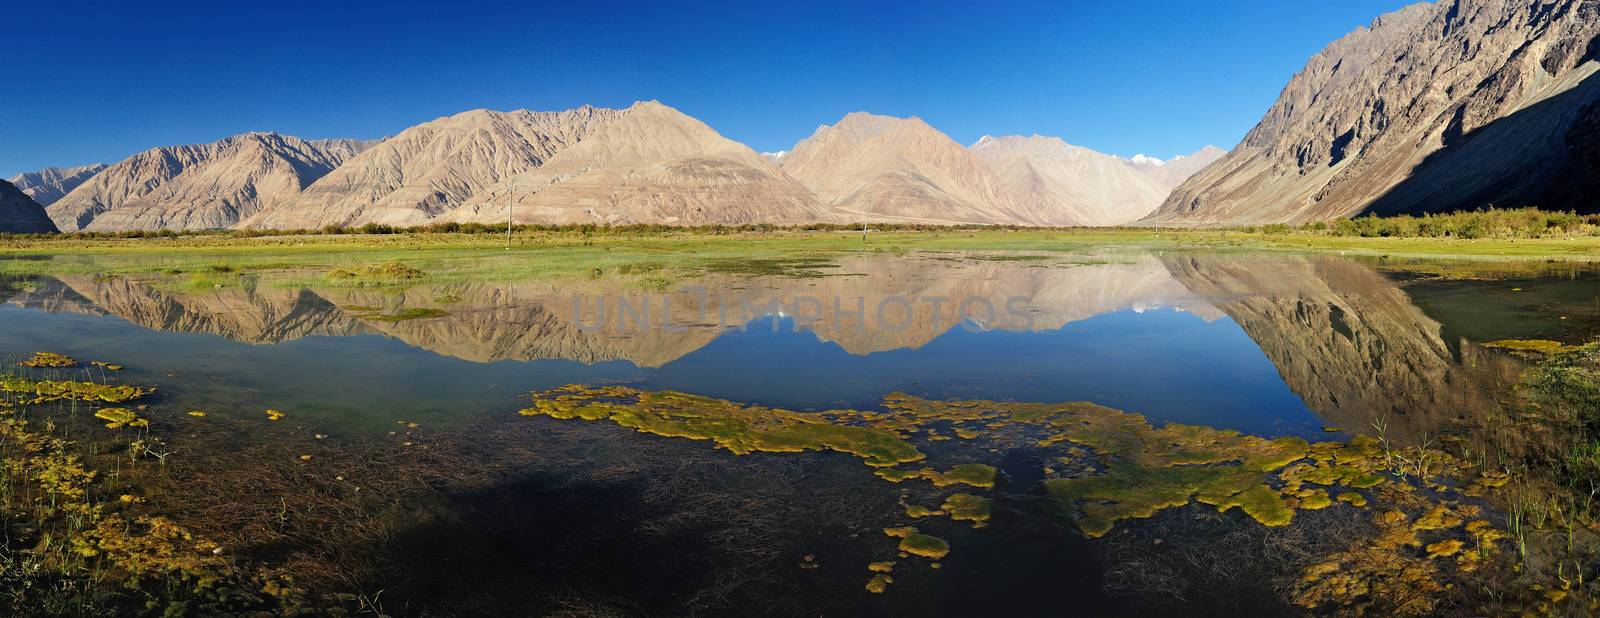 Beautiful scenic view of Leh valley, Ladakh range, Jammu & Kashmir, Northern India